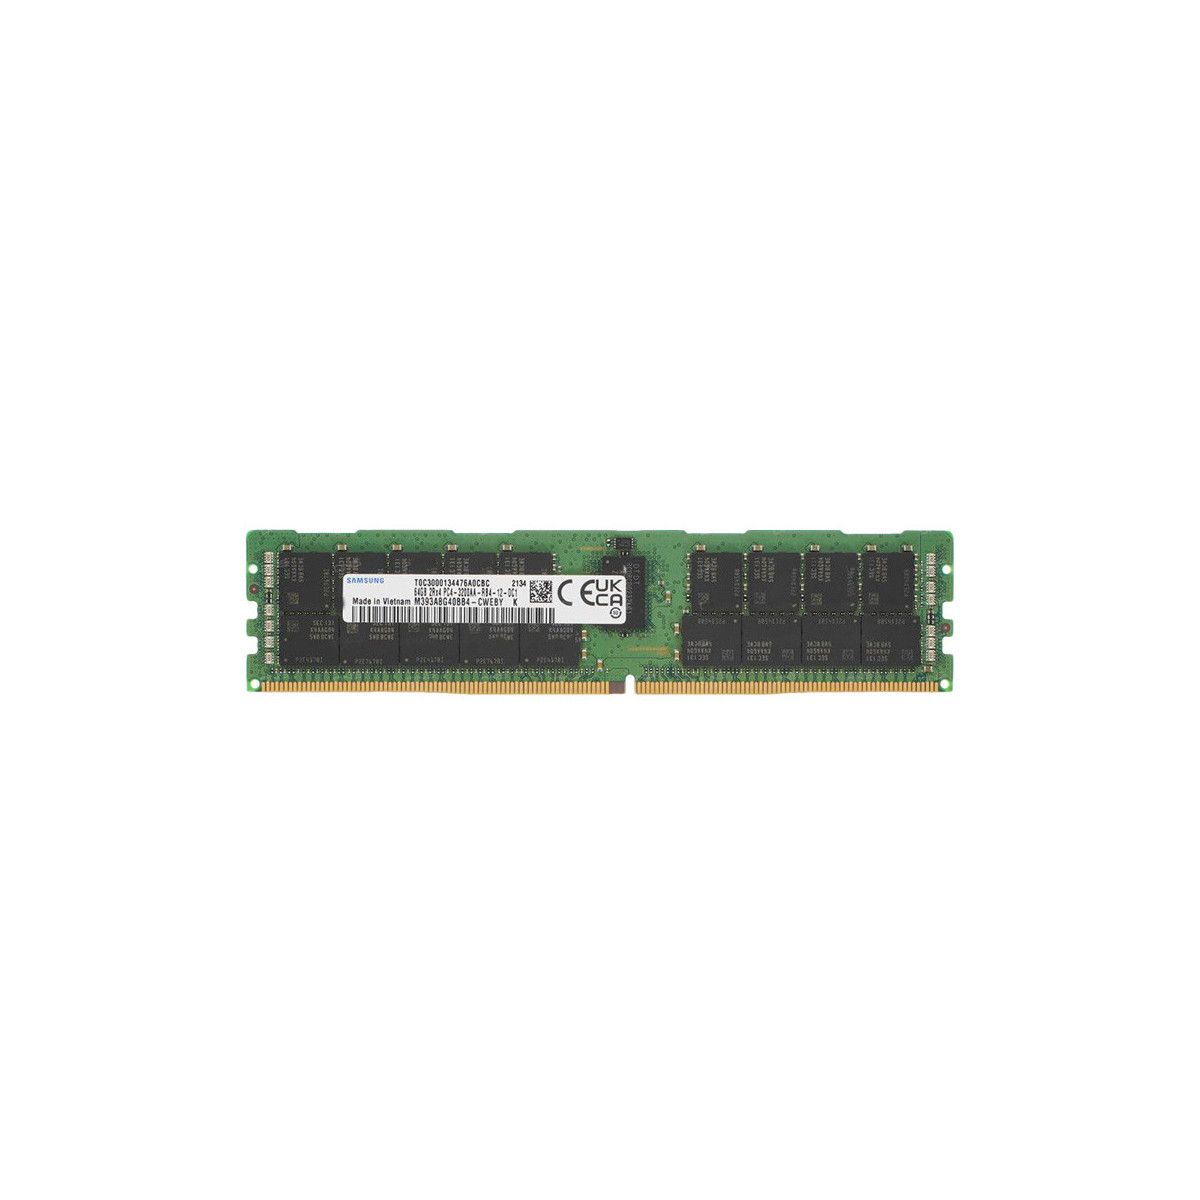 370-EVP-MS - Memstar 1x 64GB DDR4-3200 RDIMM PC4-25600R - Memorie OEM compatibilă Mem-Star 1 - Memstar 